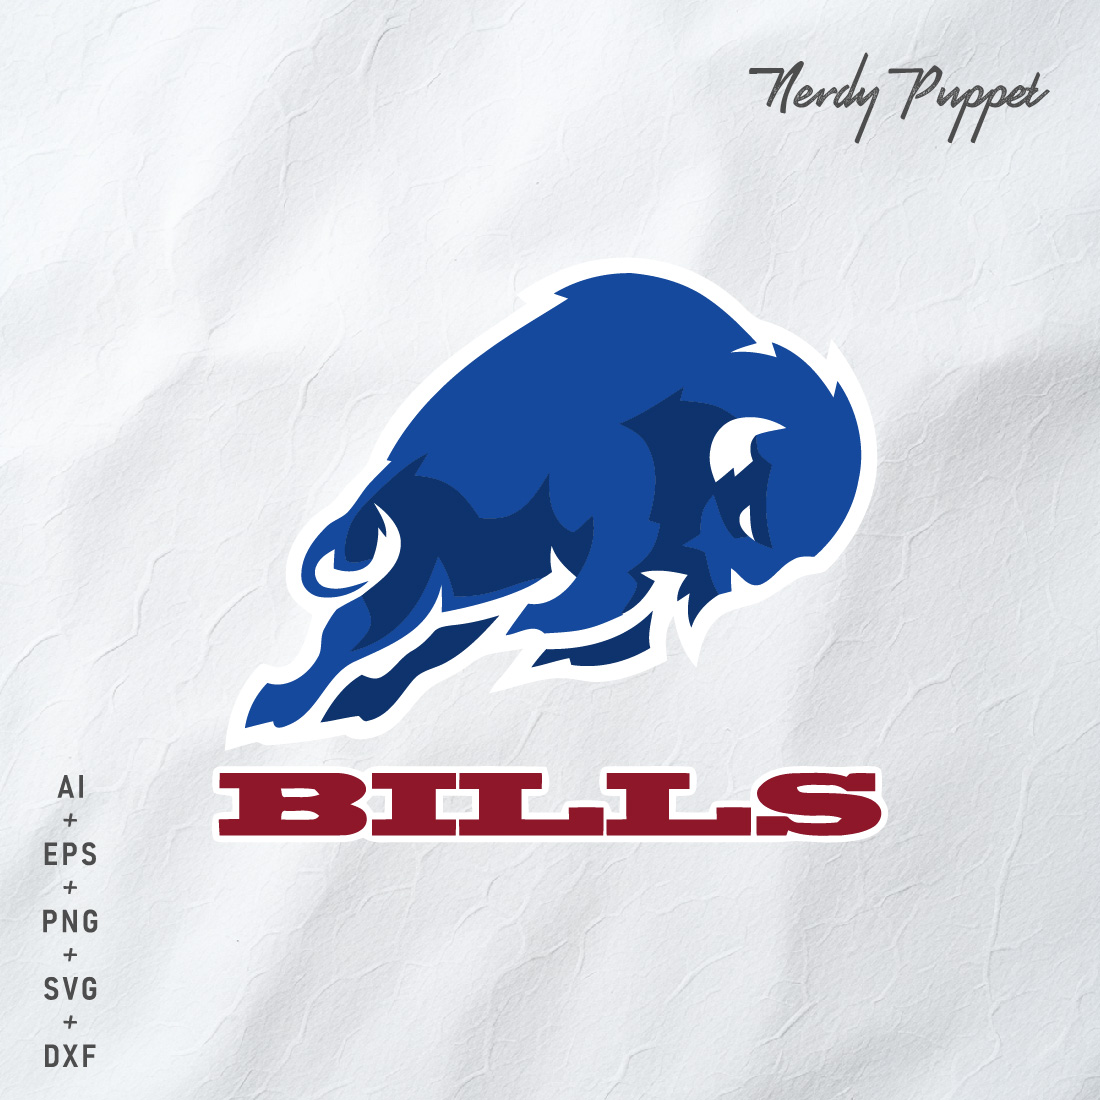 Buffalo Bills preview image.